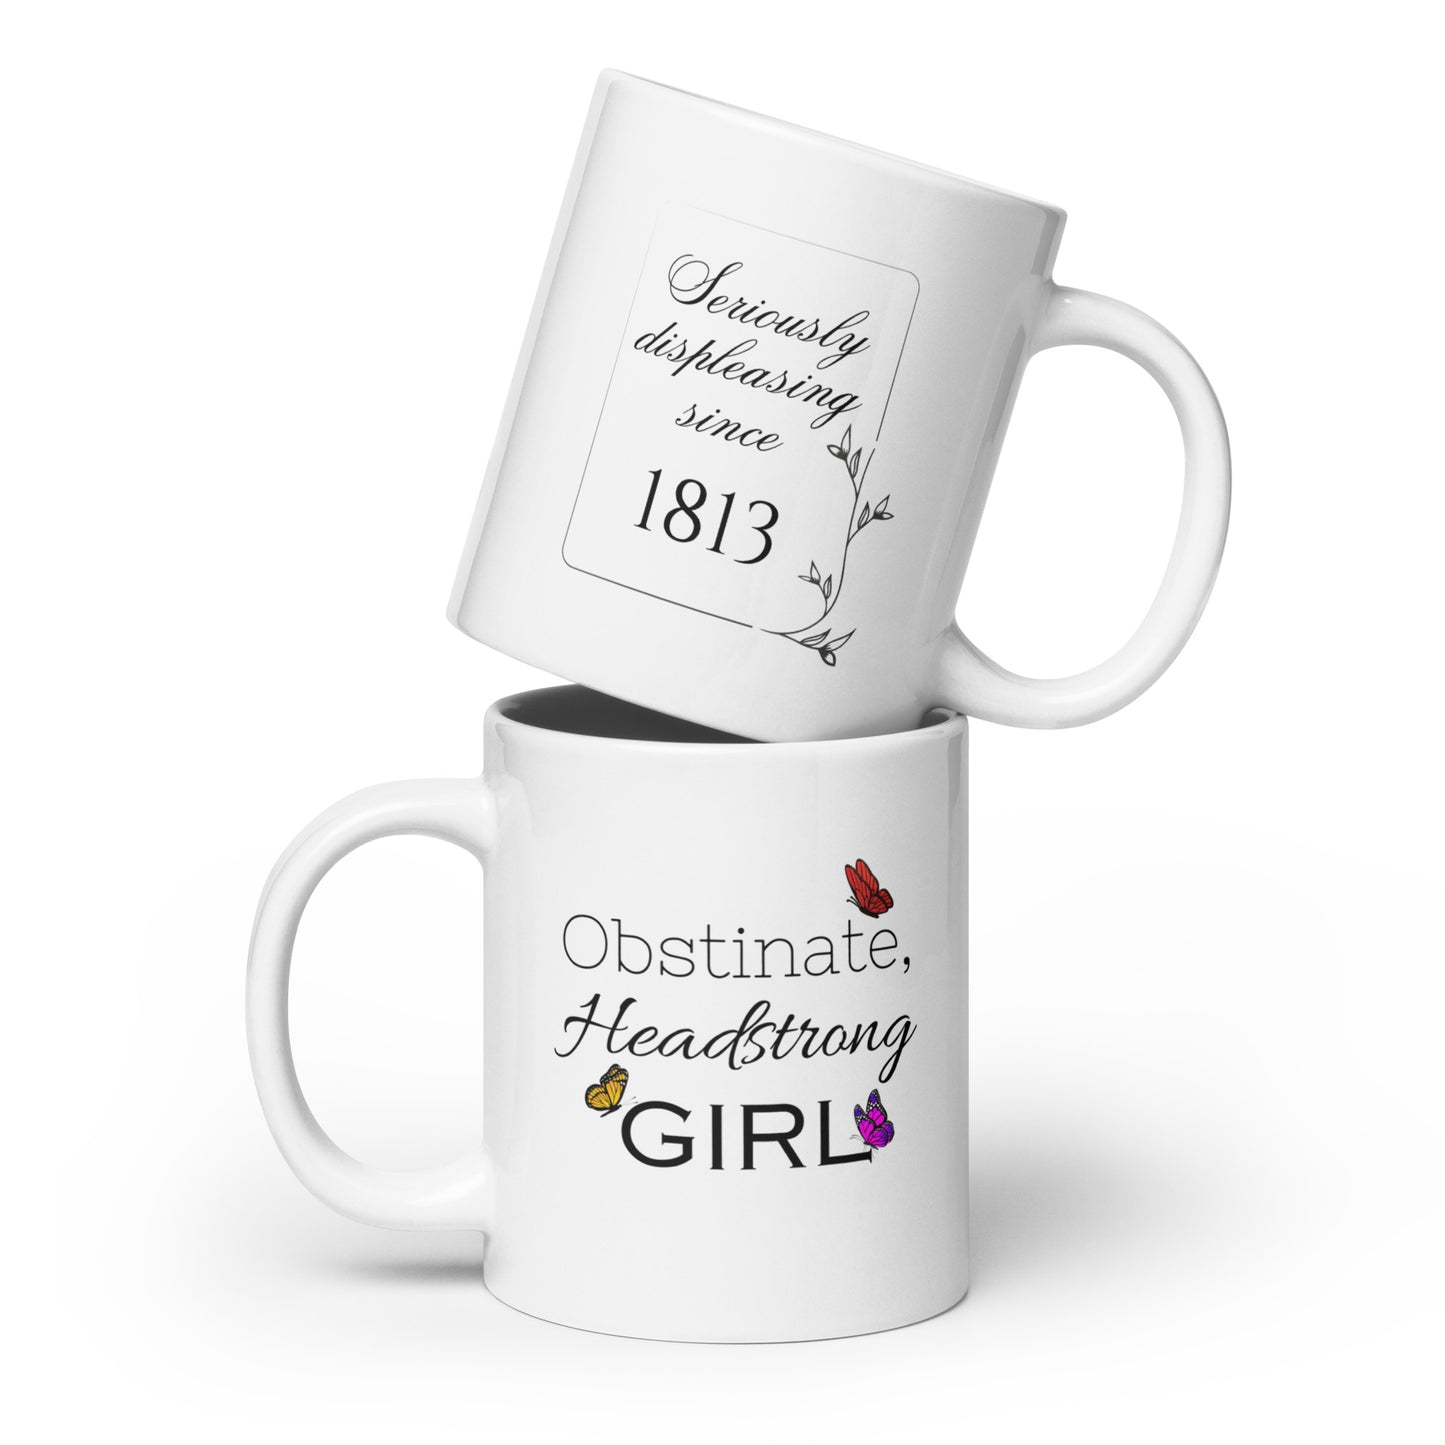 Obstinate, Headstrong Girl White glossy mug